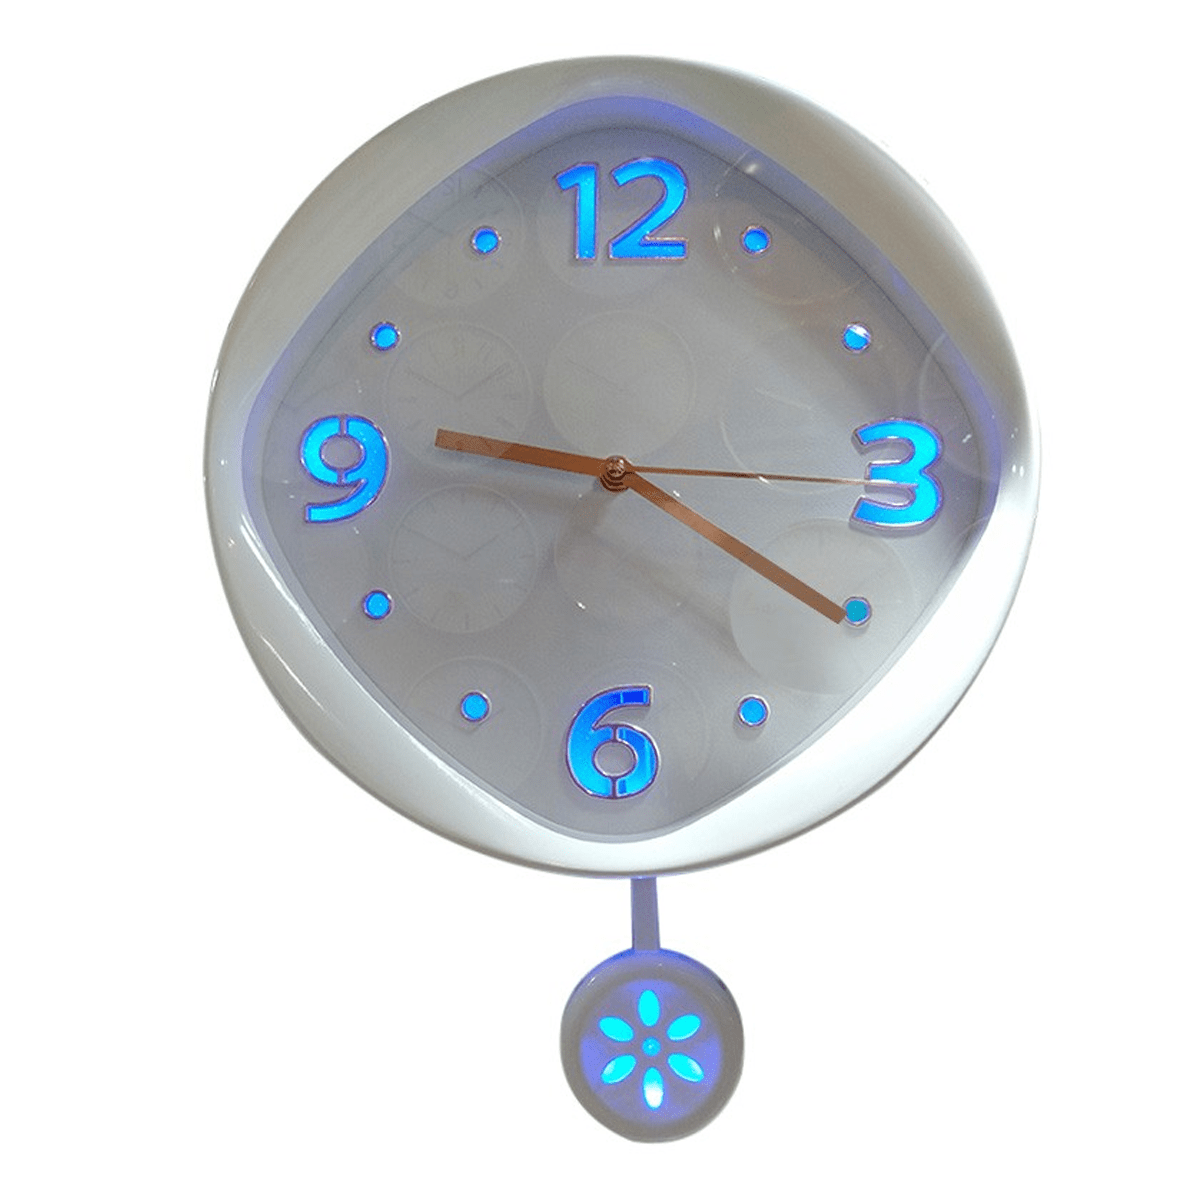 AW19 Stolpa Pendulum Wall Clock 39.5x29.5x6cm